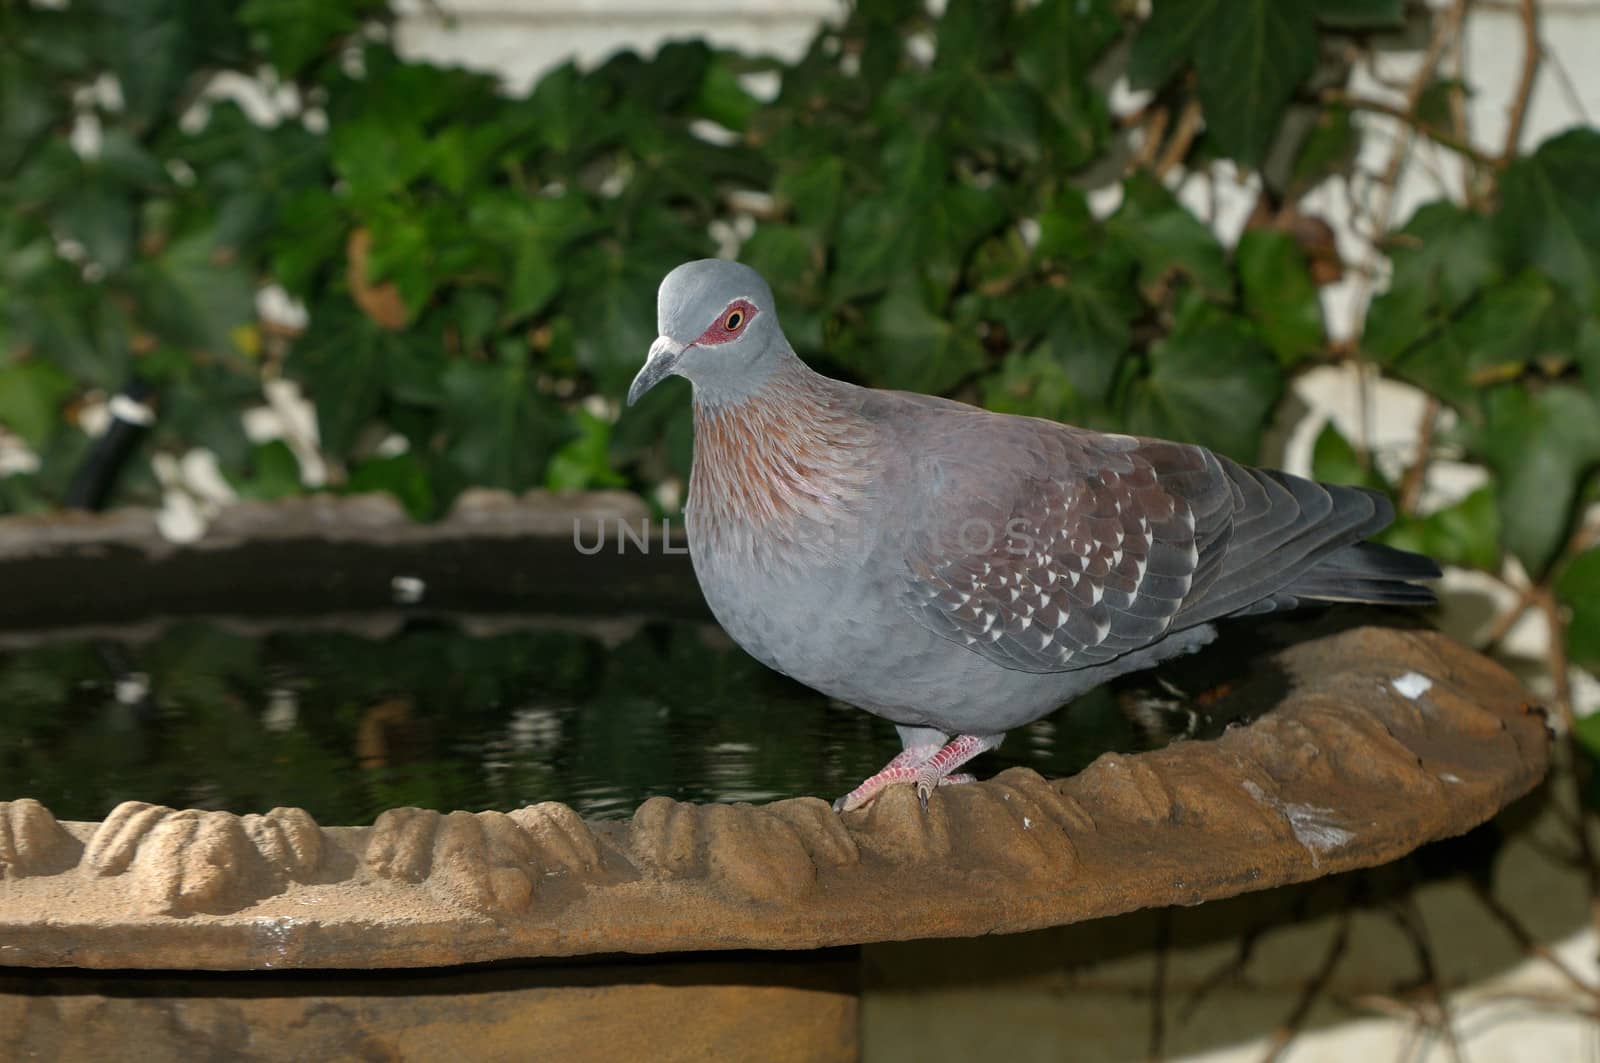 Speckled Pigeon, Columba guinea, at bird bath